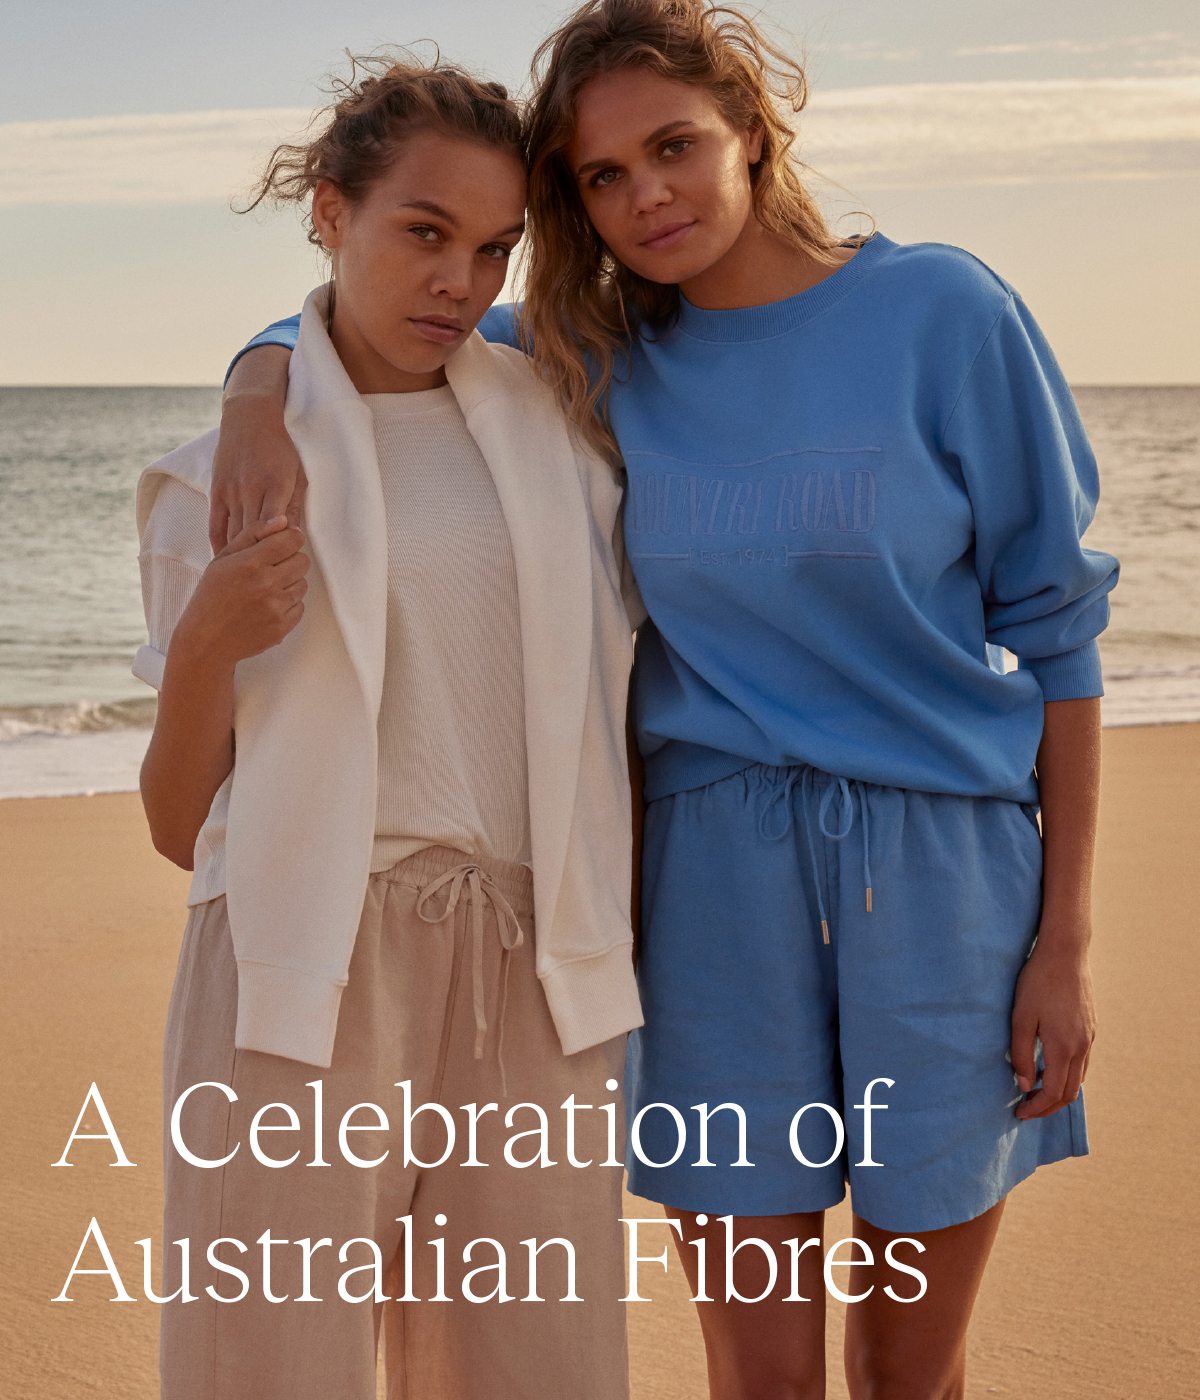 A Celebration of Australian Fibres